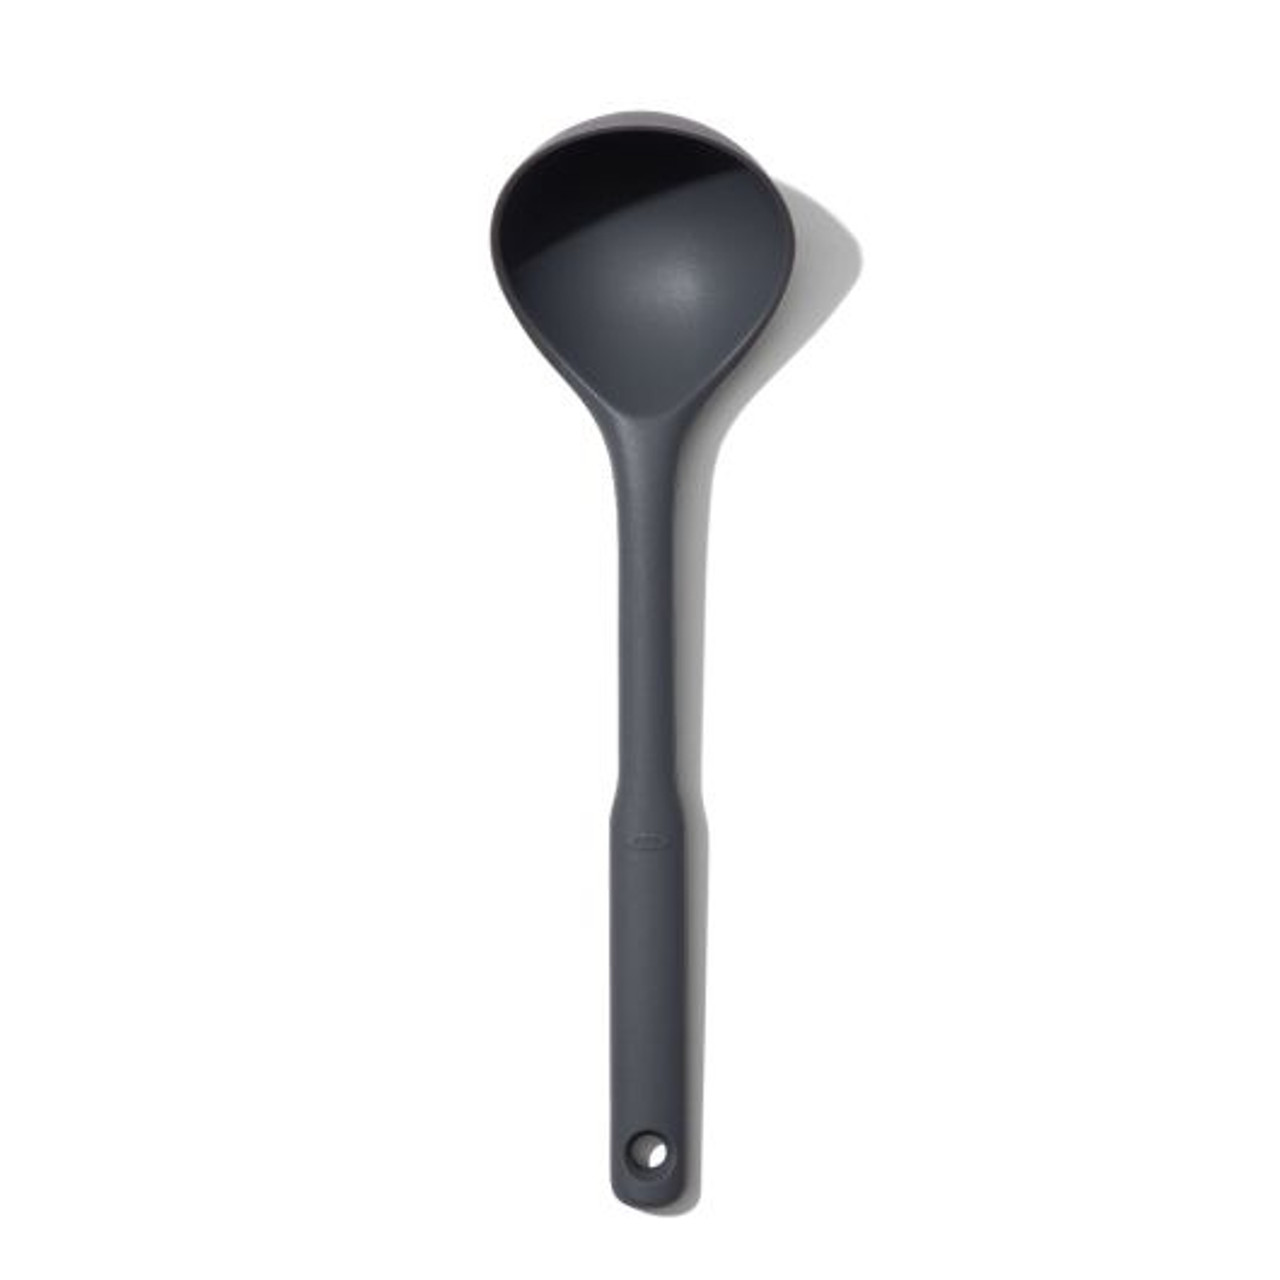 Revolution® Wood Spoon